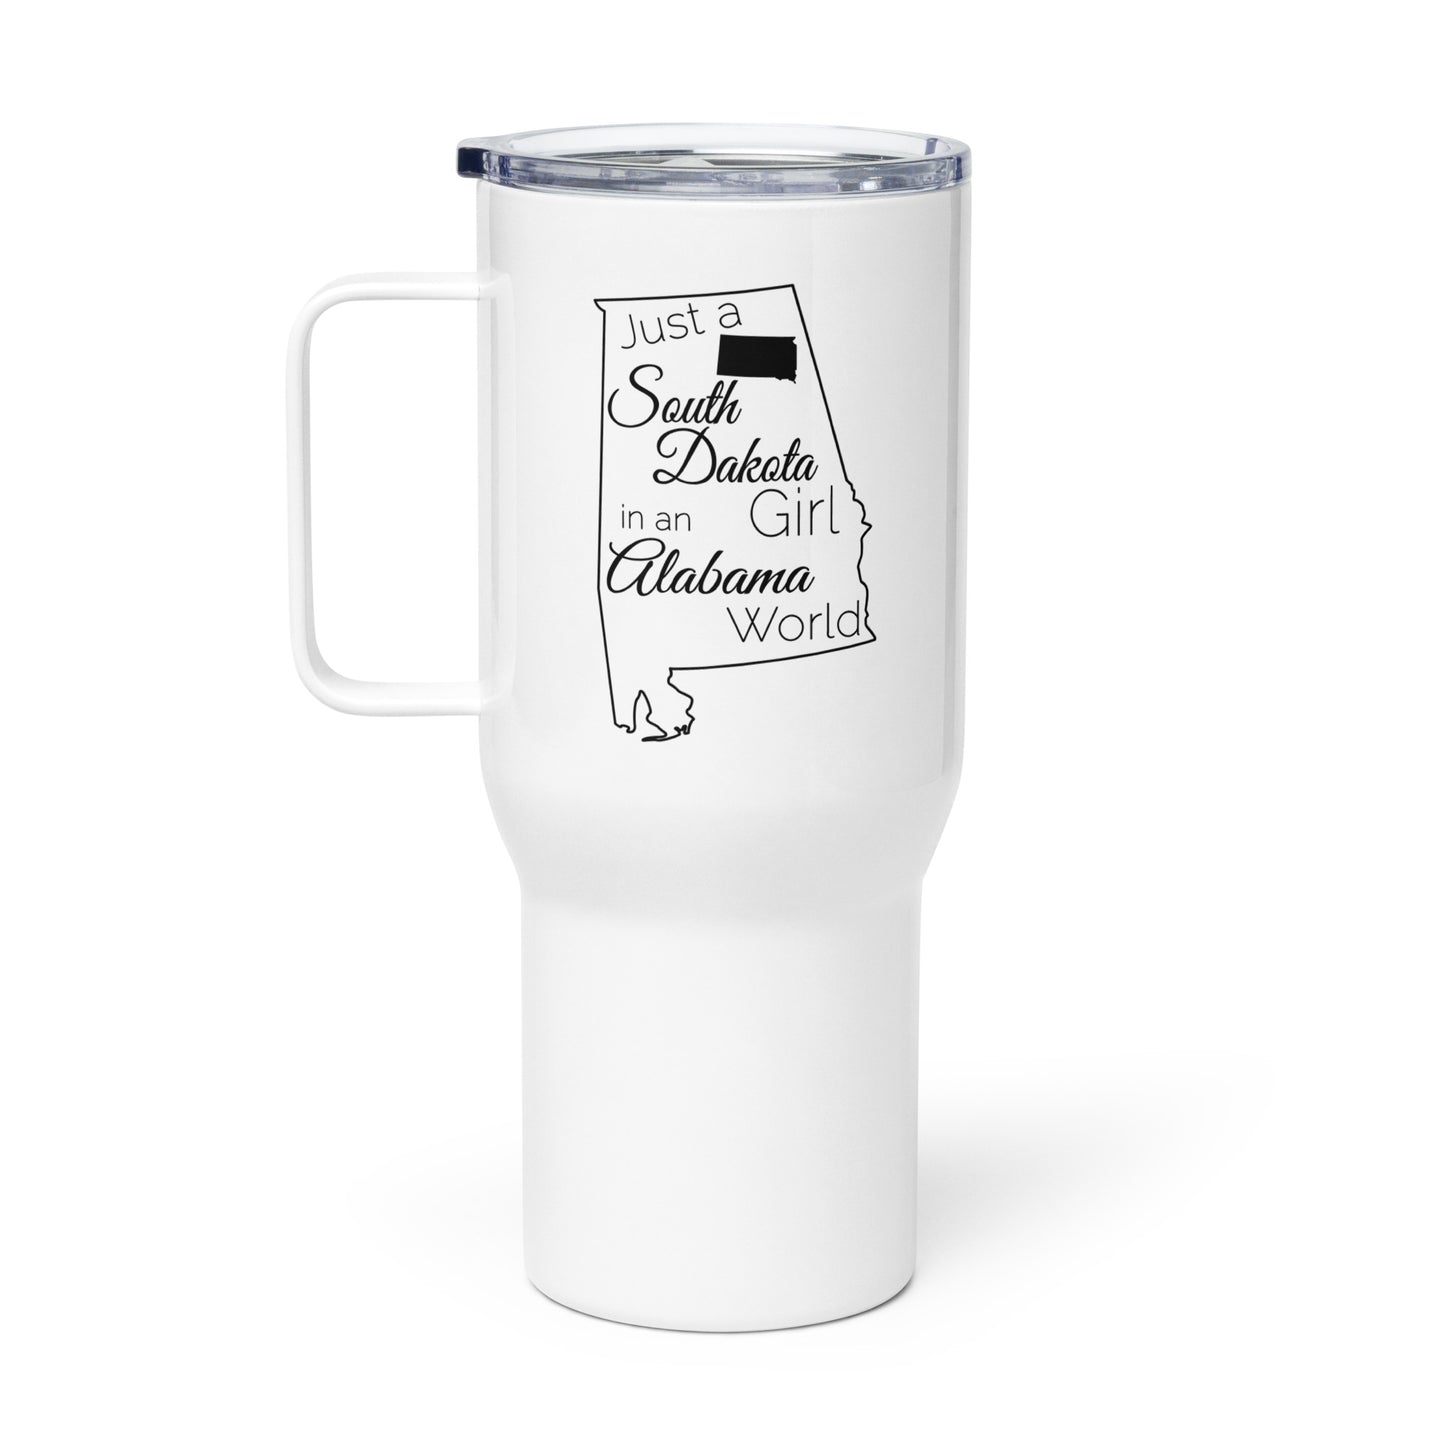 Just a South Dakota Girl in an Alabama World Travel mug with a handle